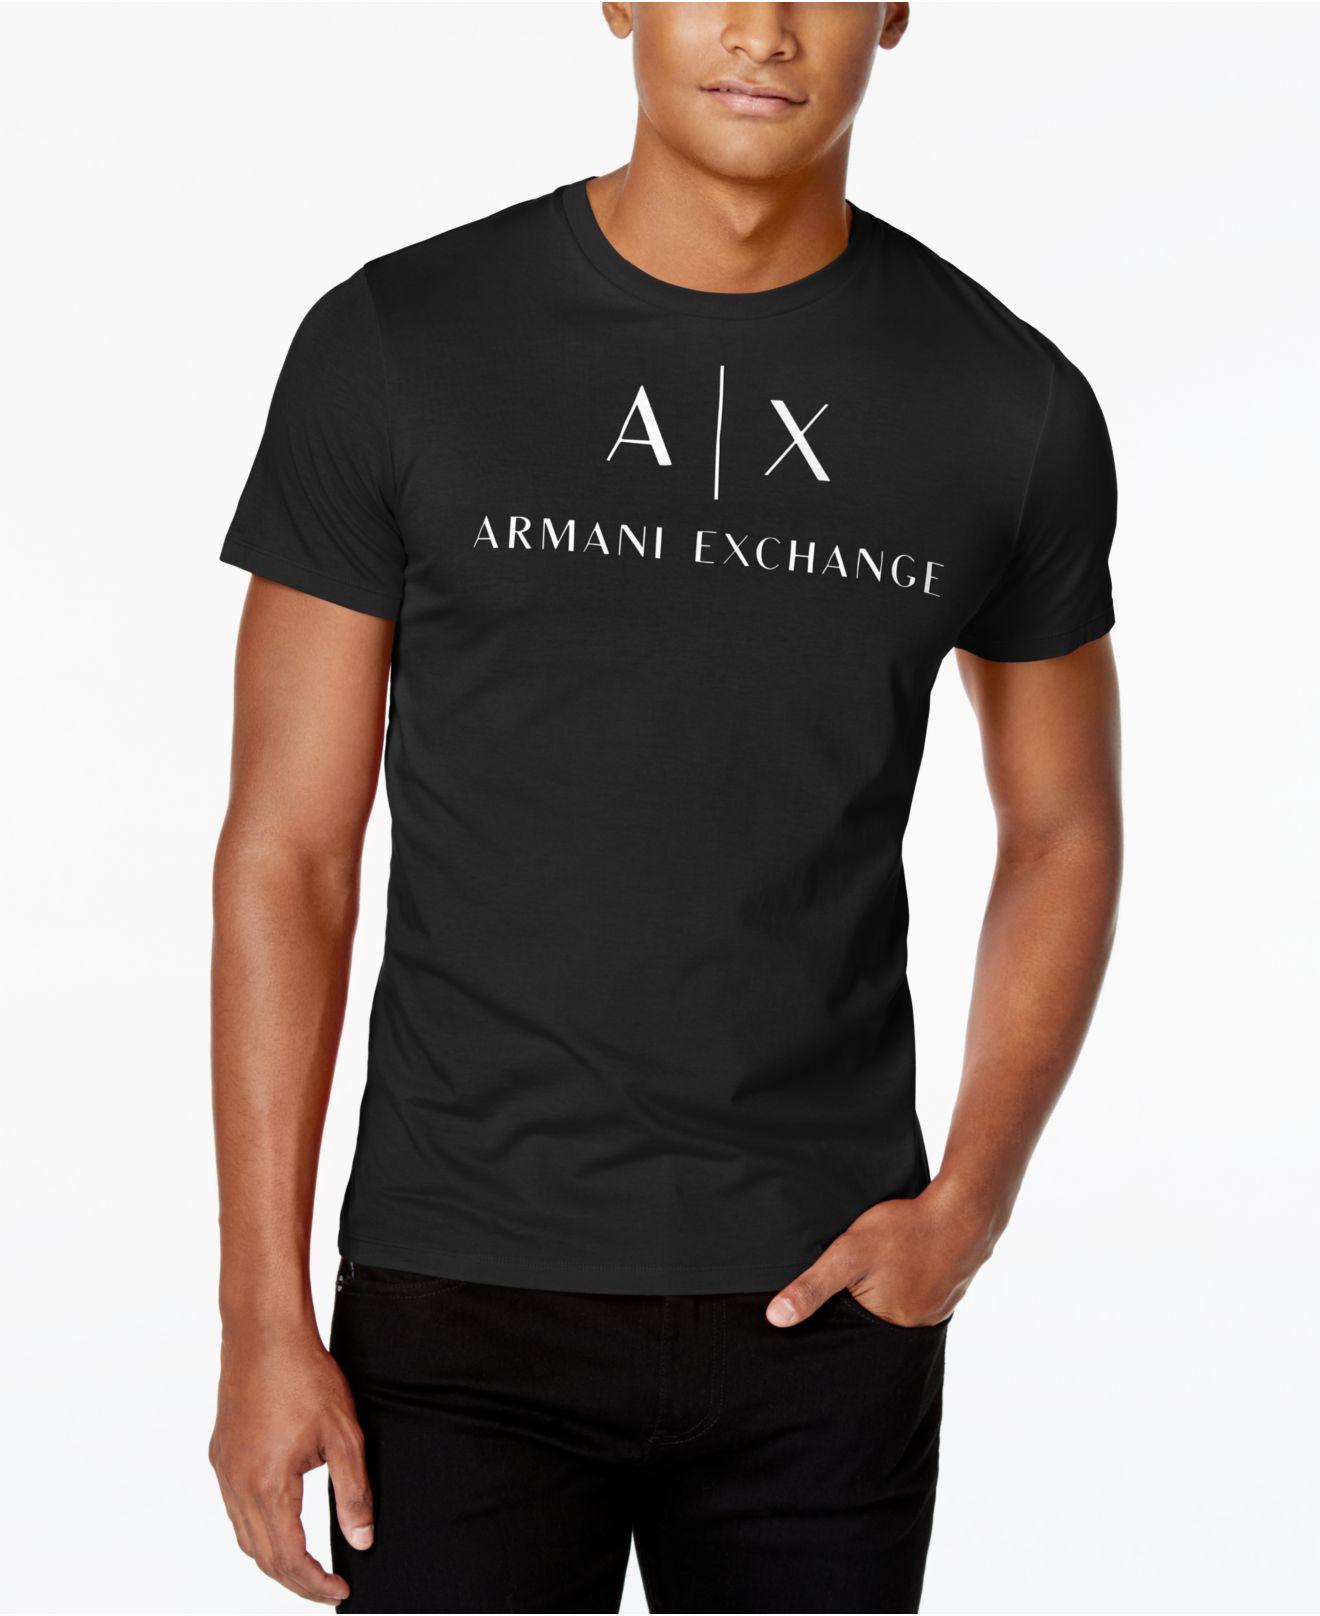 armani exchange t shirts sale